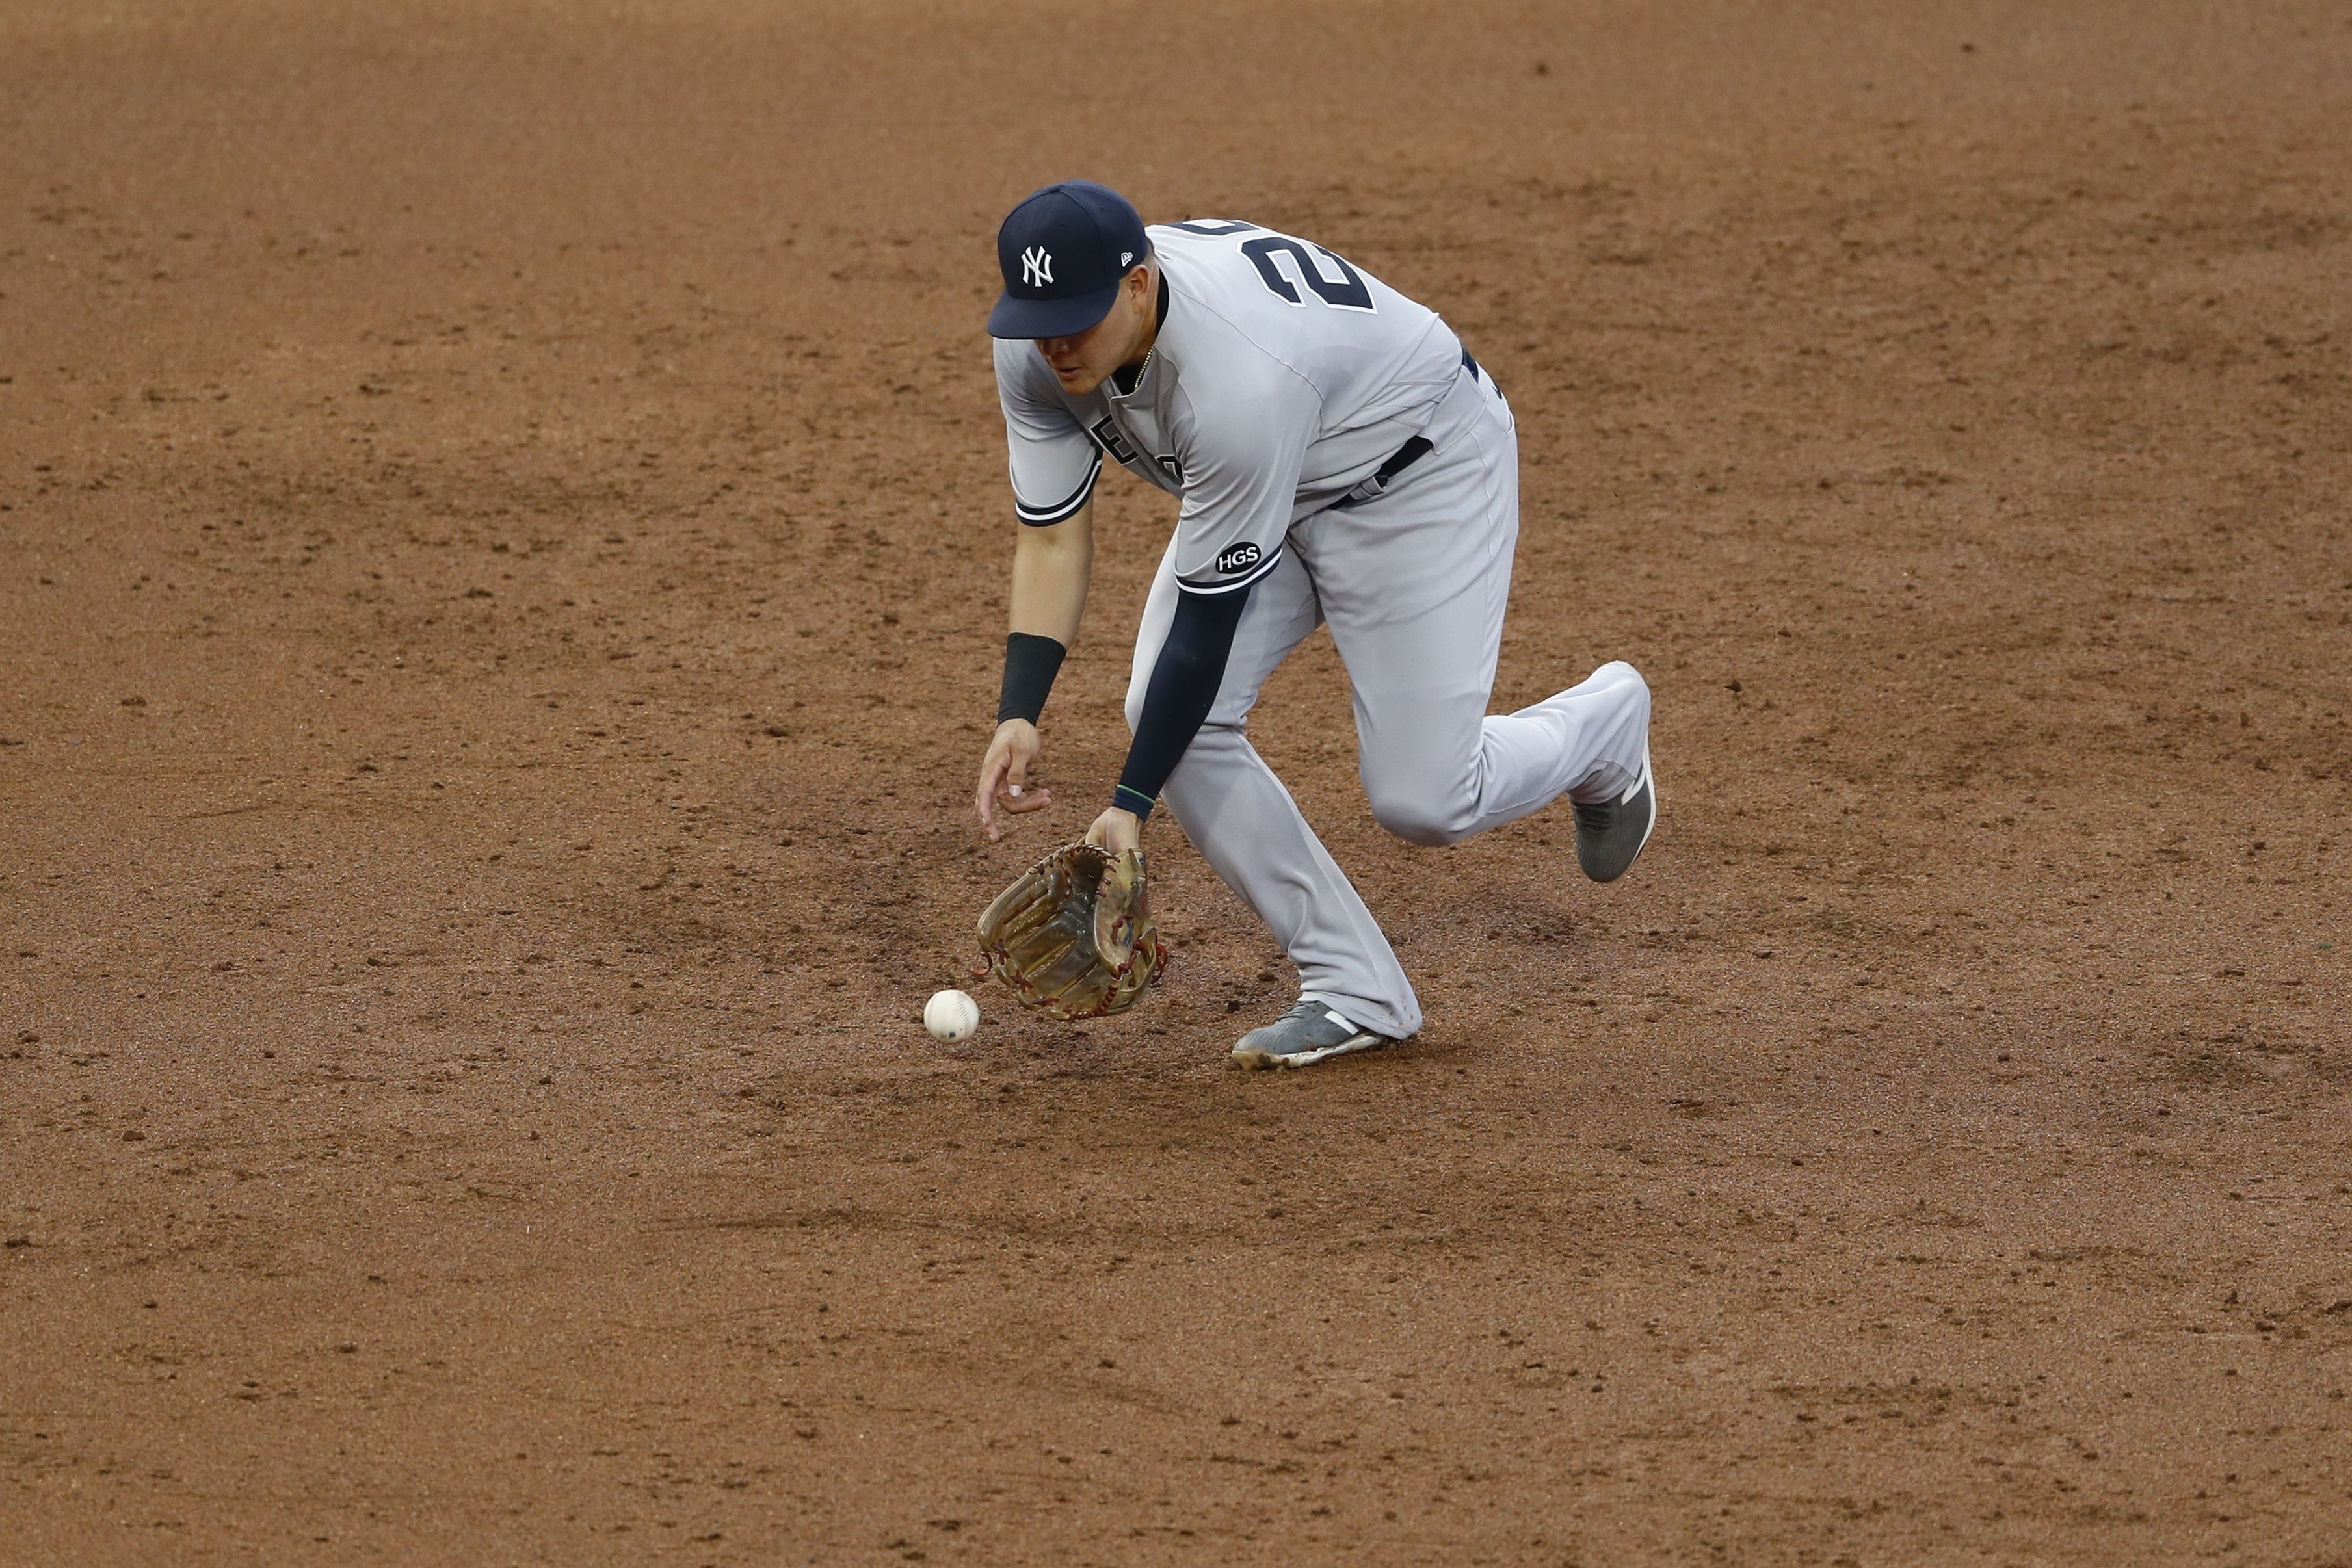 Yankees' Gio Urshela has elbow surgery to remove bone spur